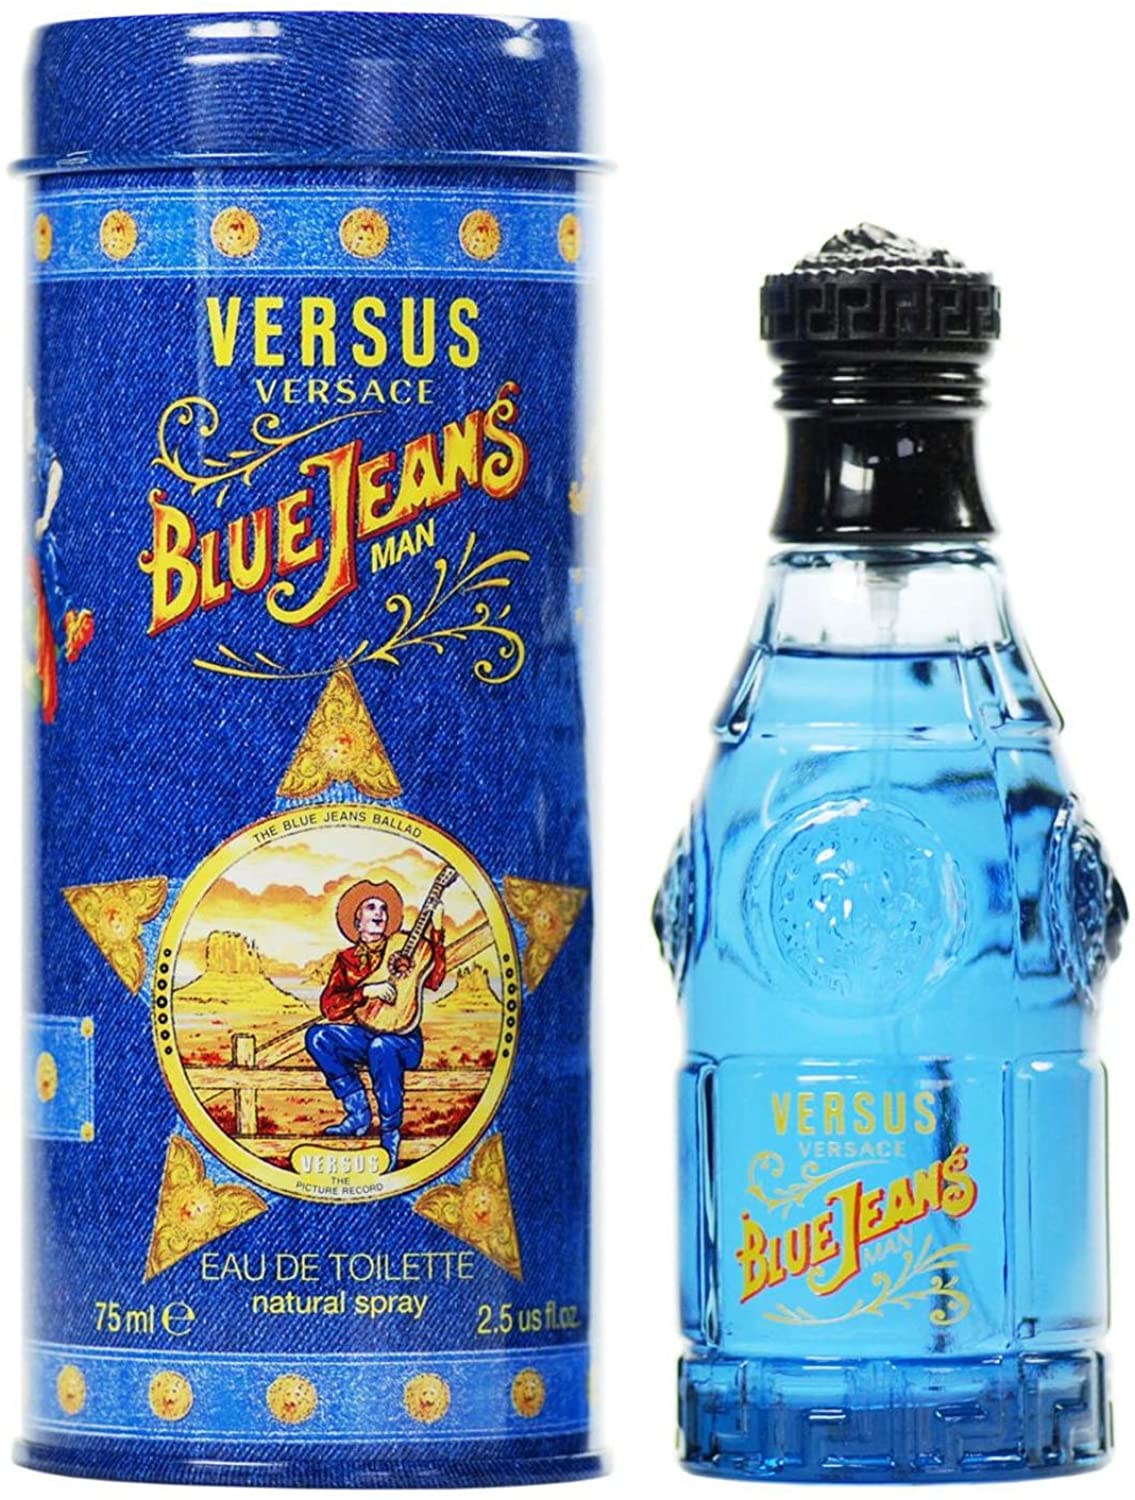 Versace perfume for men blue jeans
